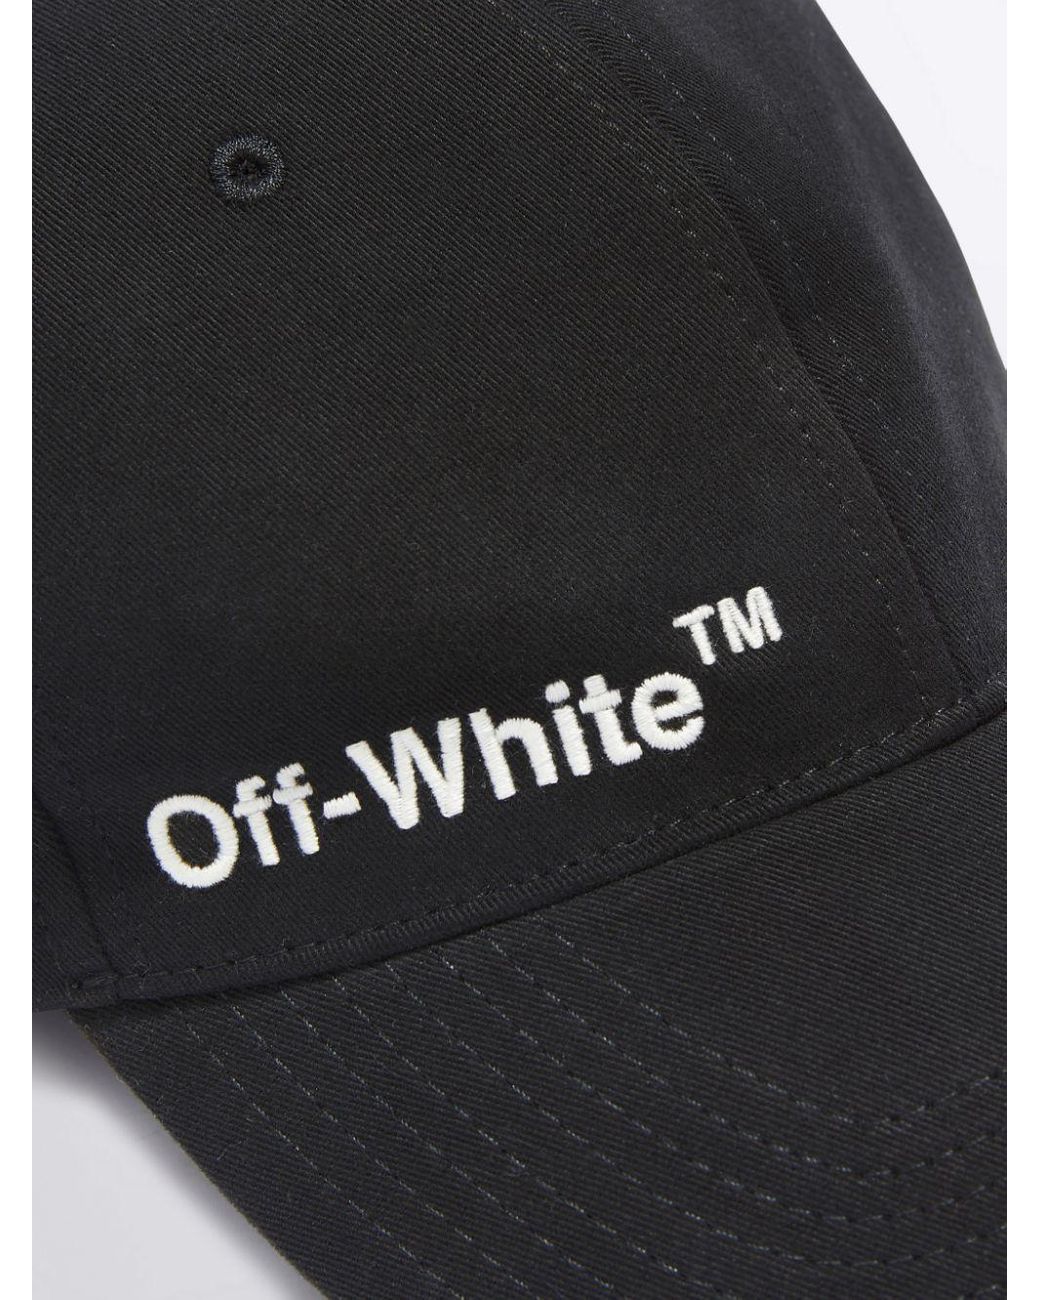 Off-White c/o Virgil Abloh Cotton Off White Hats Black for Men - Save 38% |  Lyst